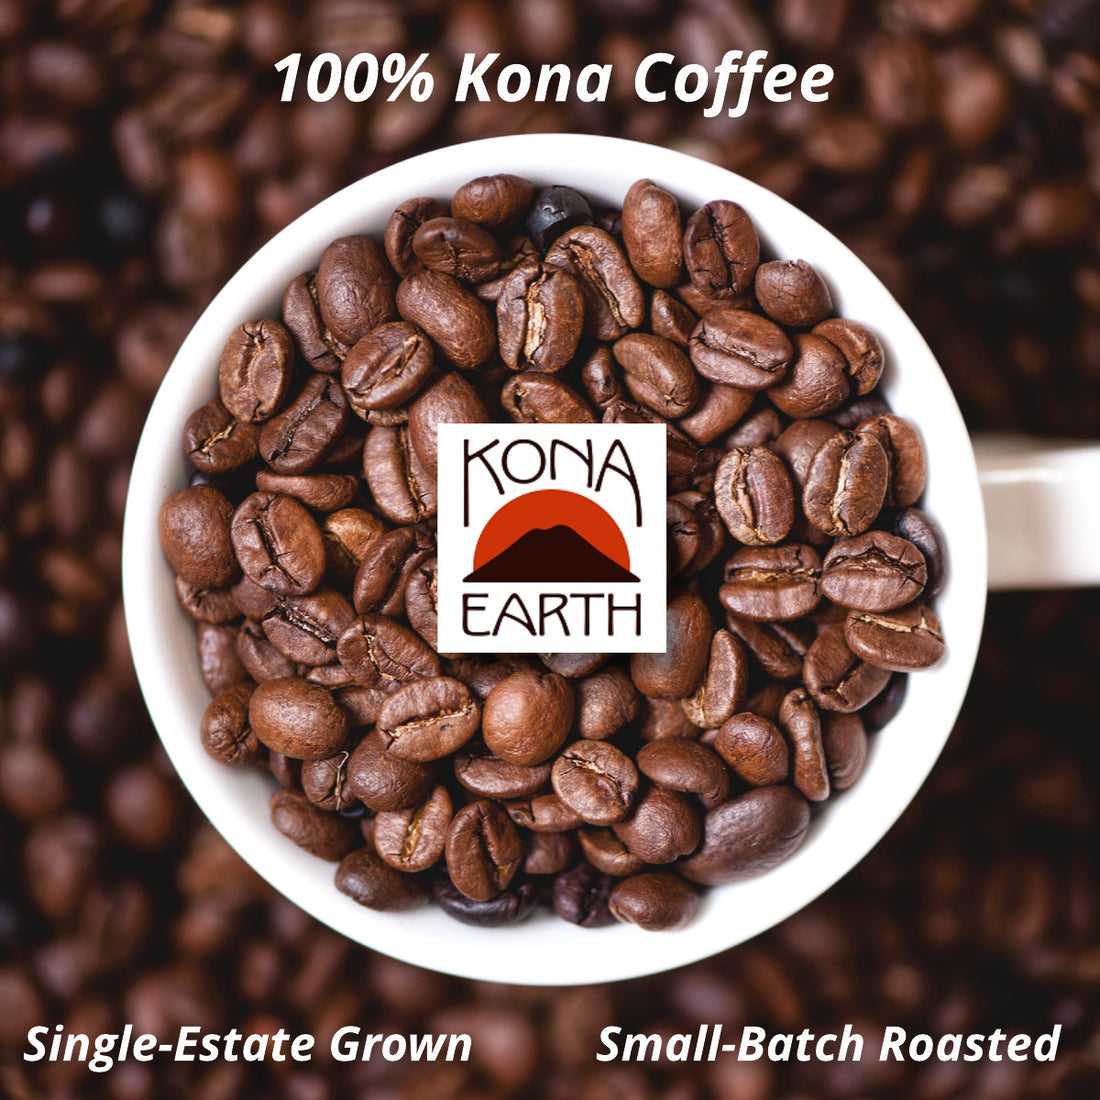 Kona Coffee: A Brand Worth Protecting